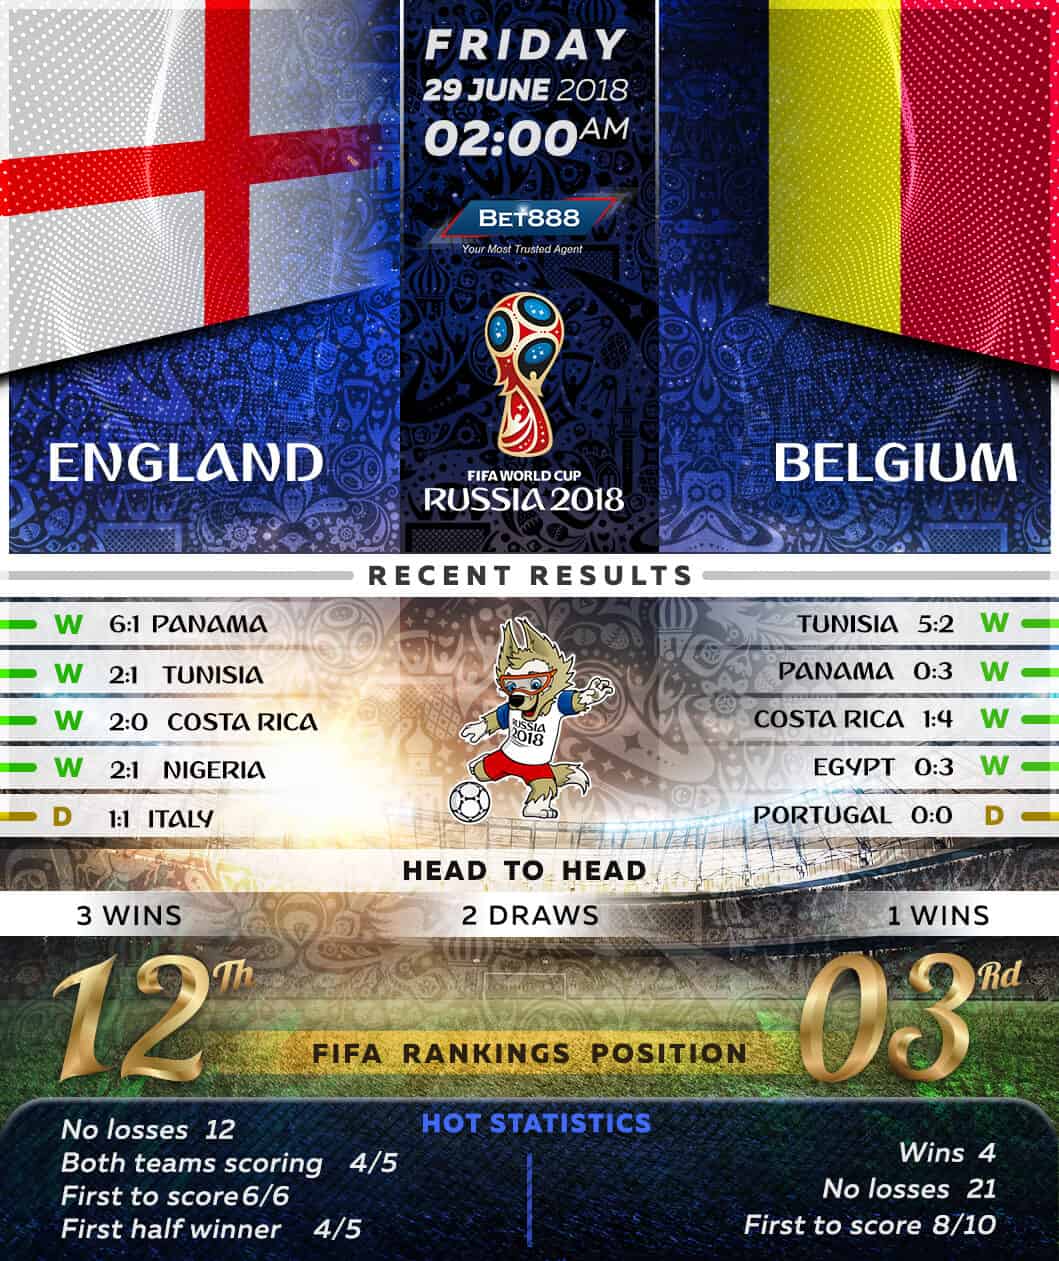 England vs Belgium 29/06/18